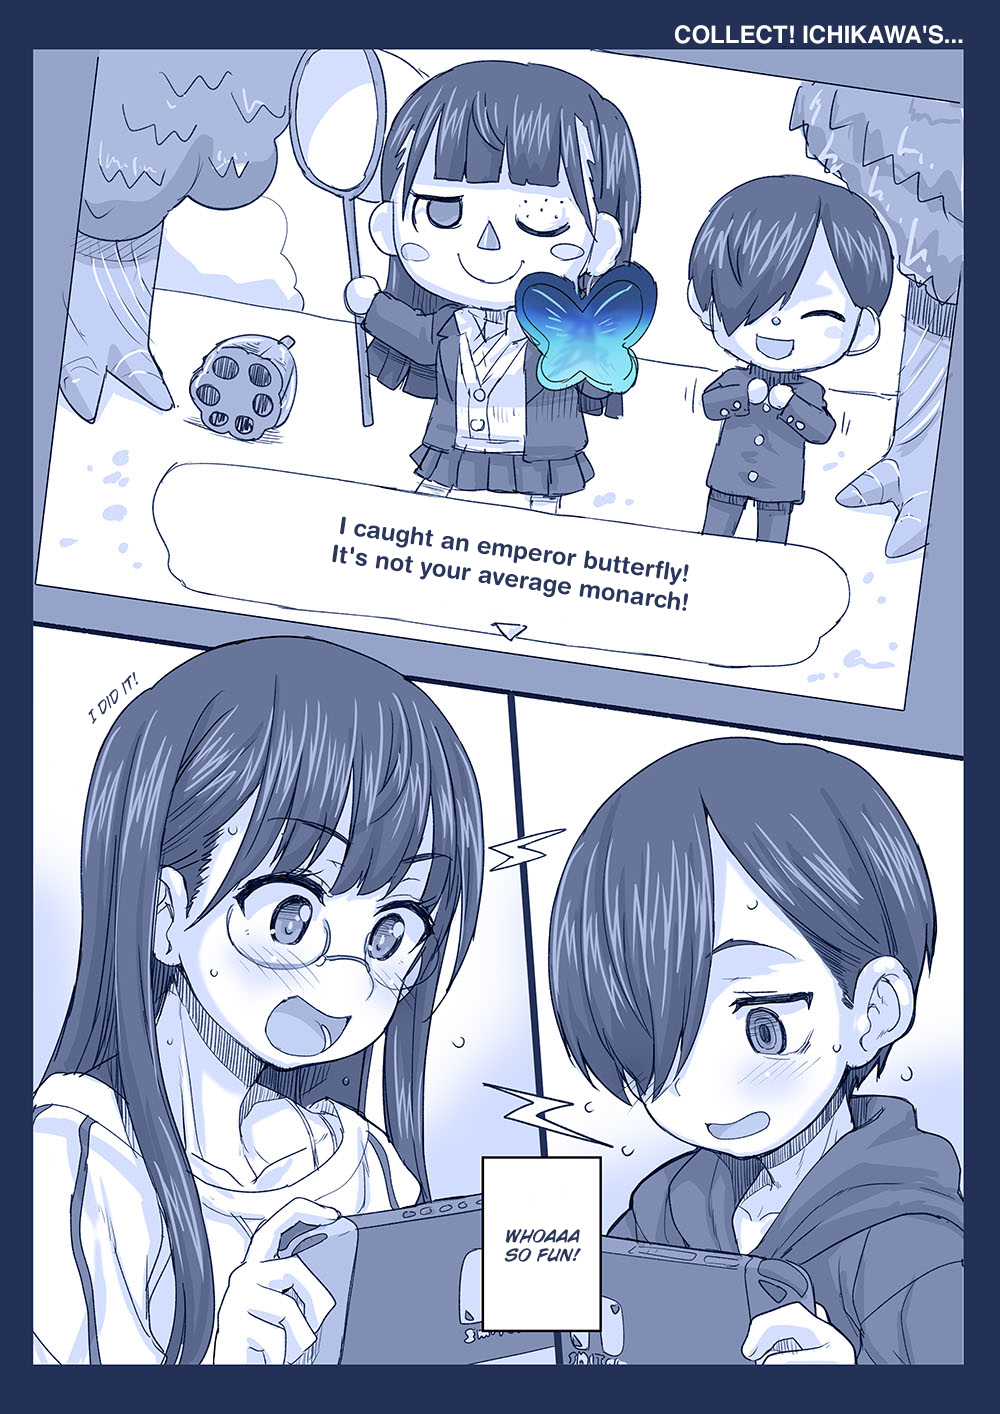 Boku No Kokoro Yabai Yatsu Twitter comics by Fountains Square Ch. 17 Collect Ichikawa's...